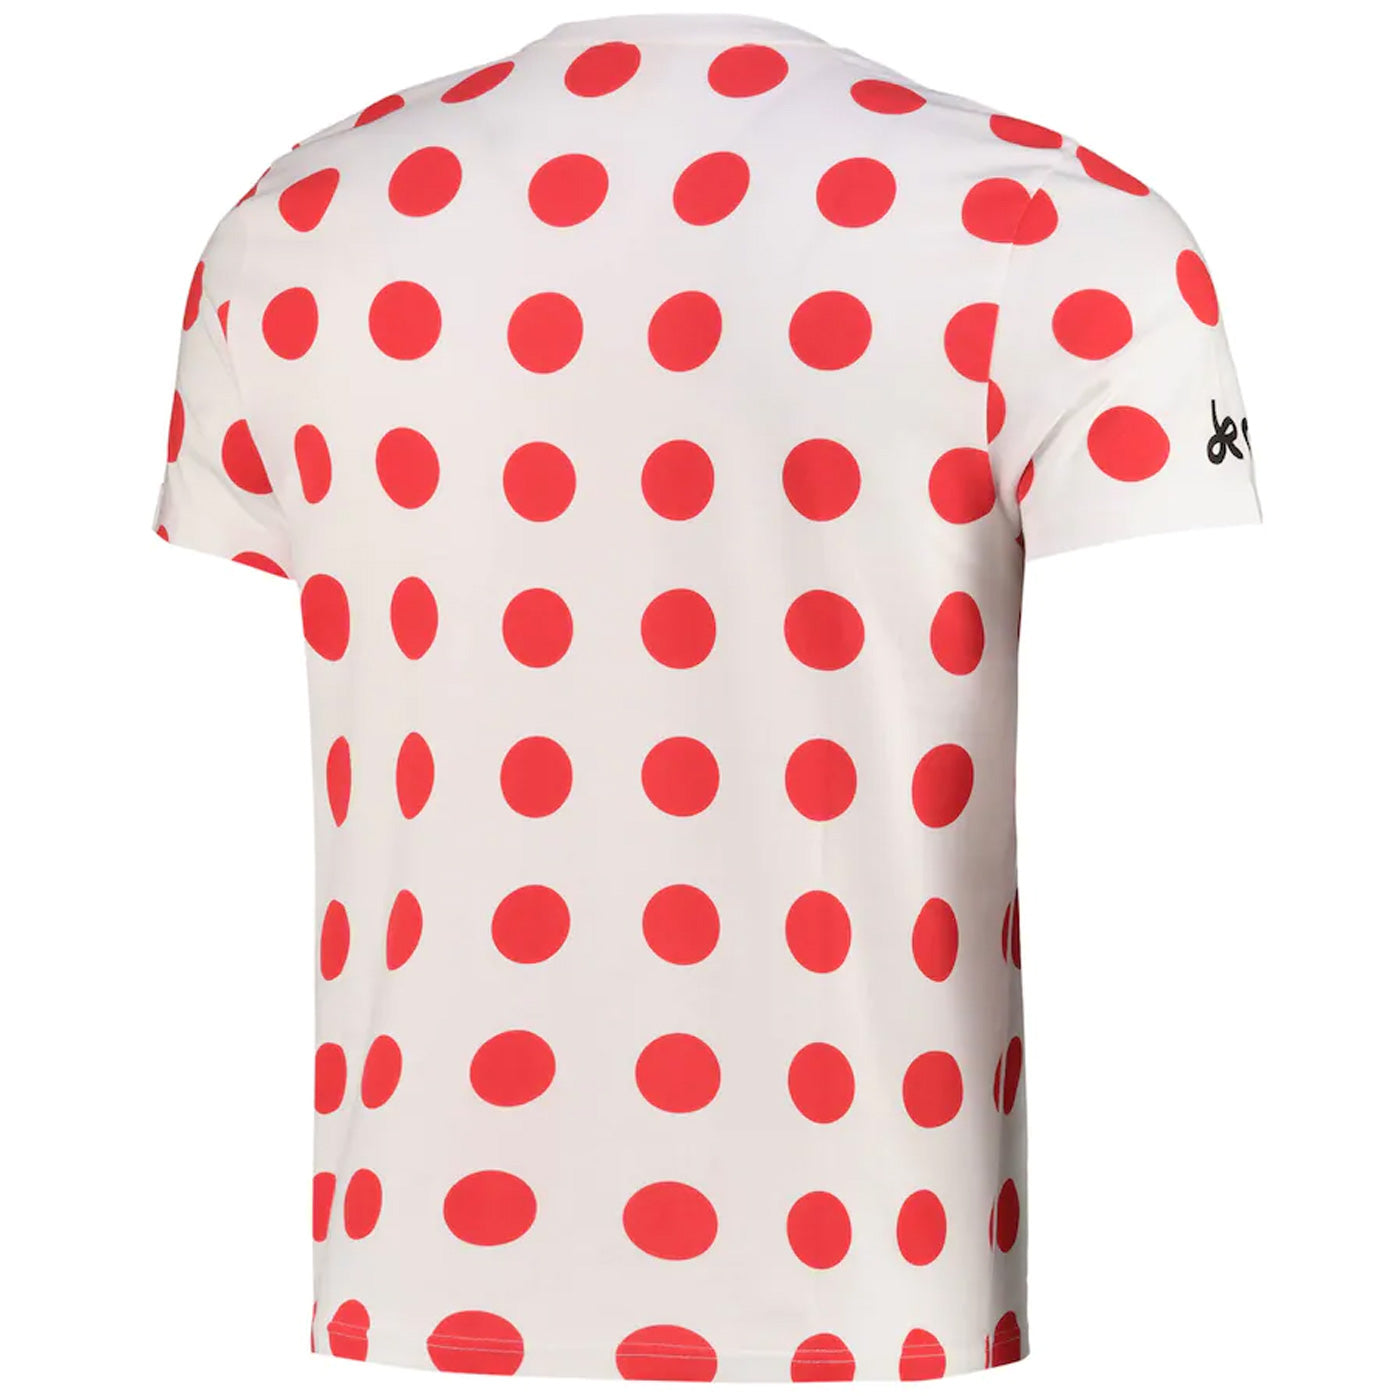 Tour de France Leader 2022 t-Shirt - Polka Dot